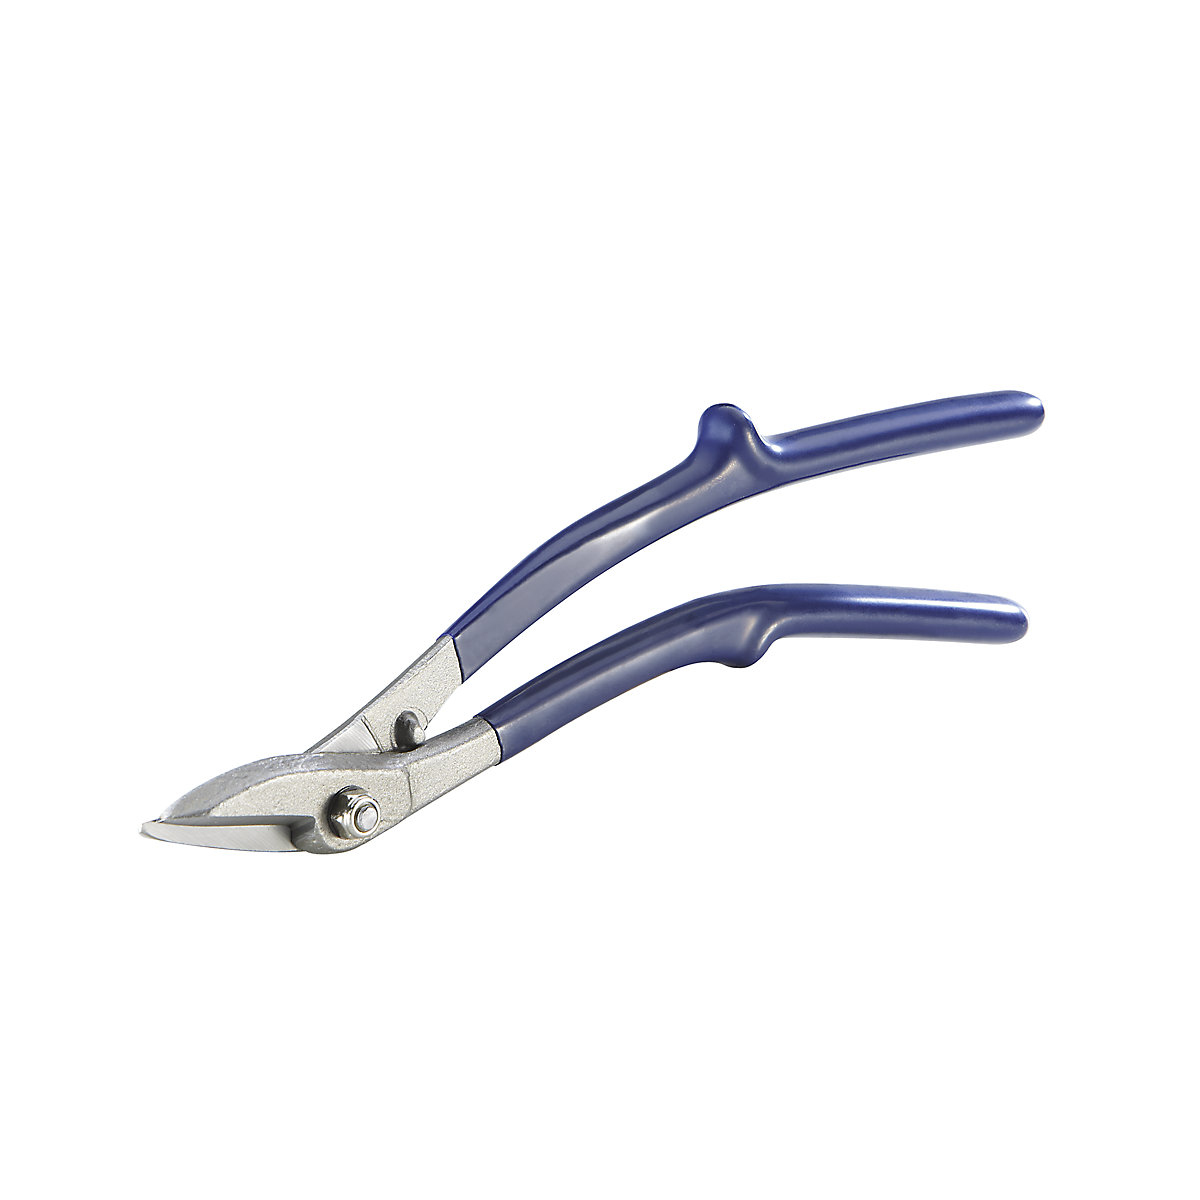 Steel strip scissors